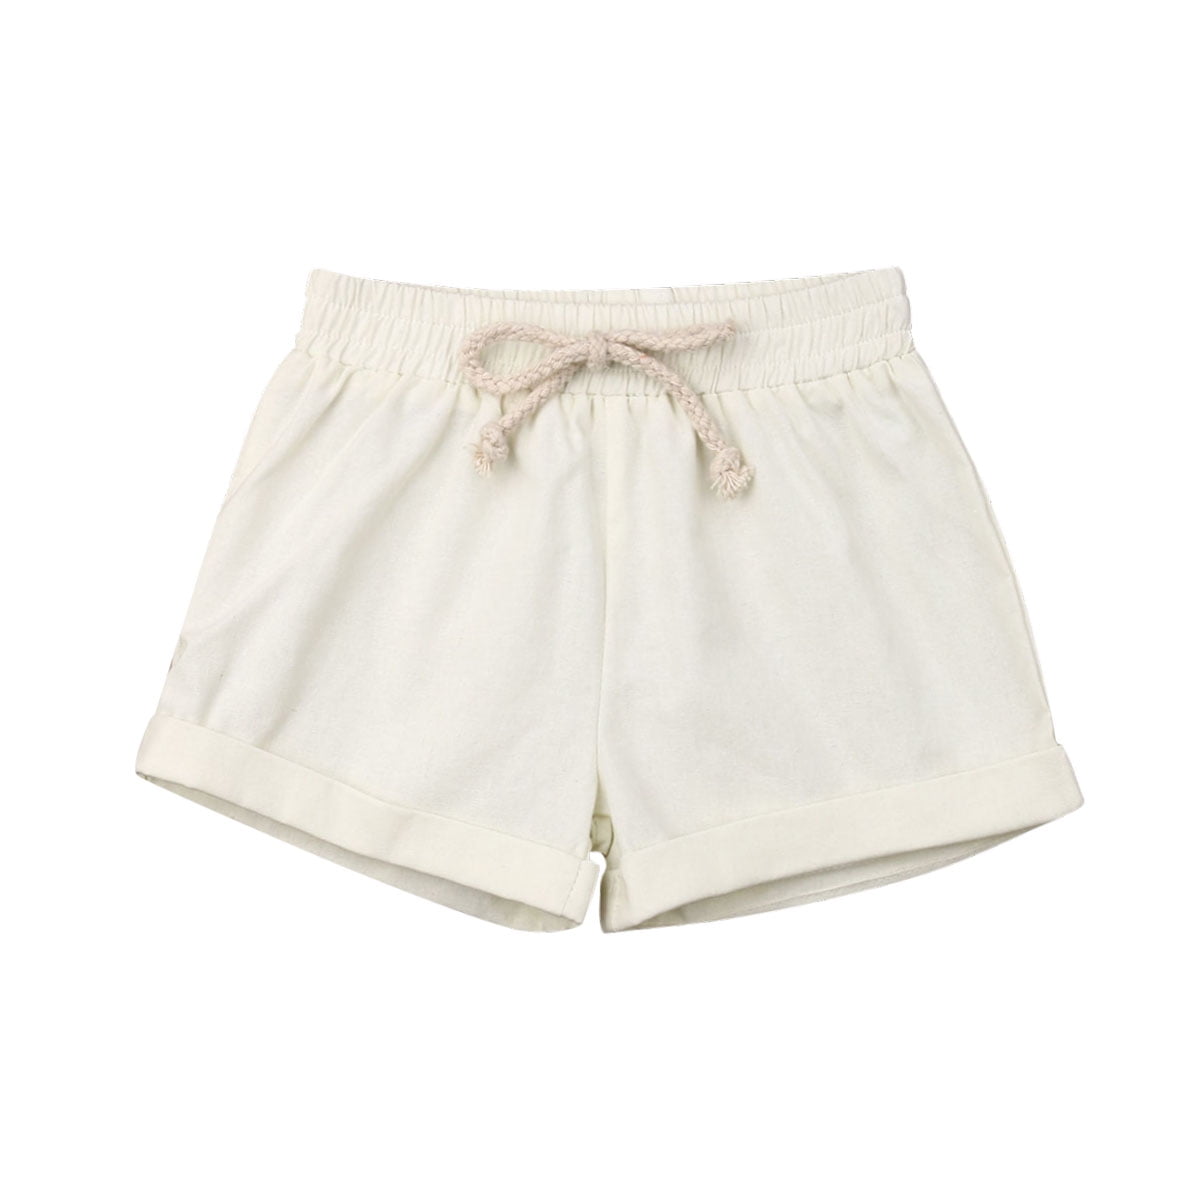 Kids Baby Boy Girl Casual Shorts Pants Toddler Infant Harem Jogger Trouser 6M-4Y 